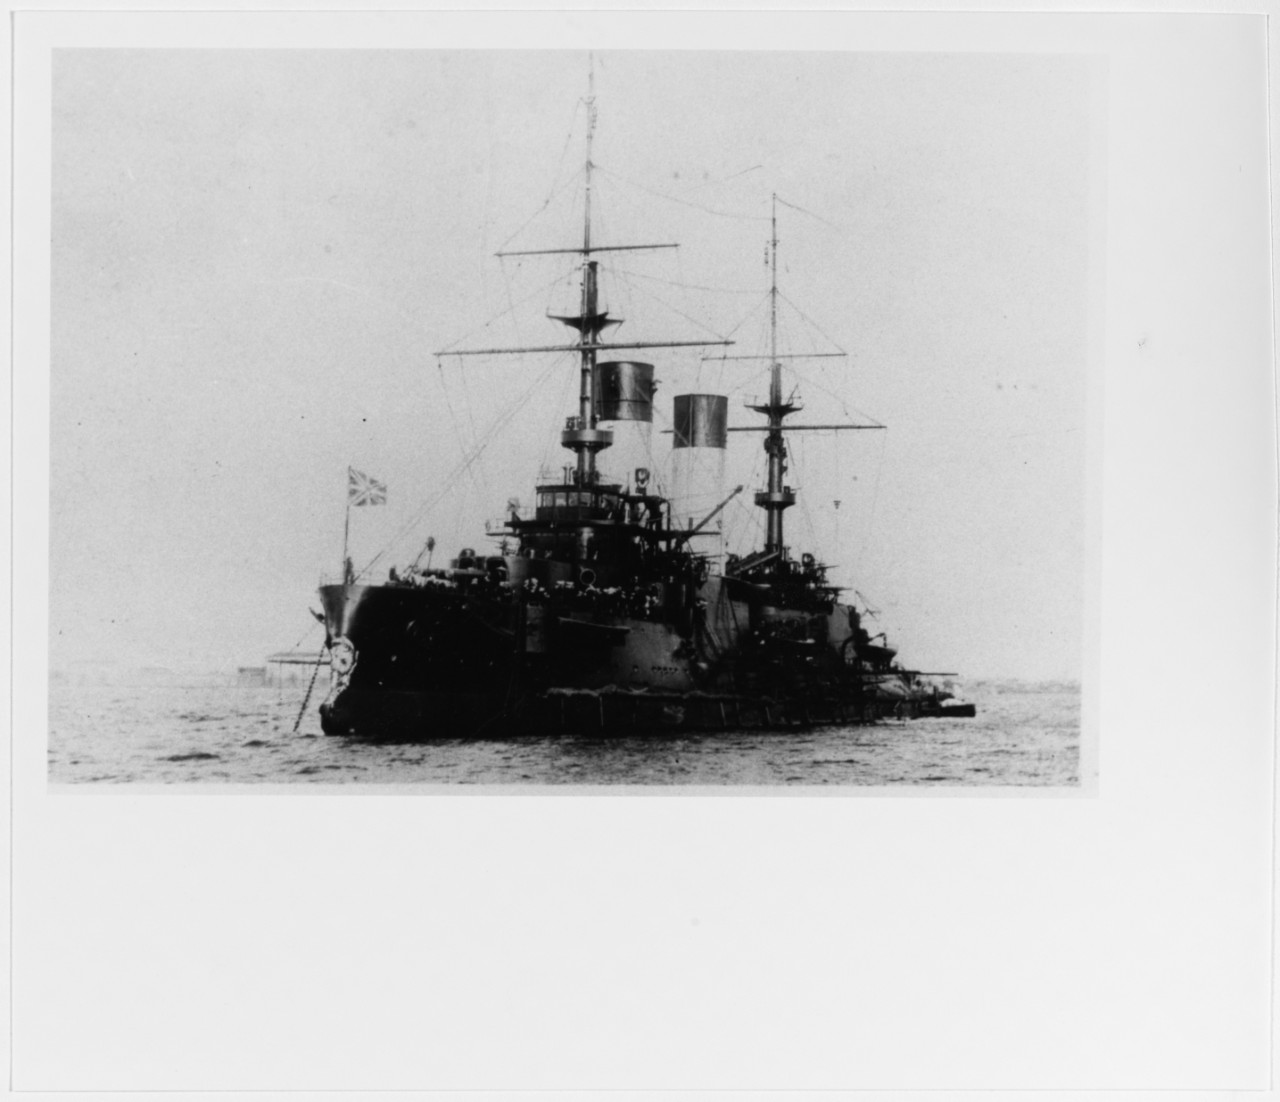 IMPERATOR ALEKSANDR III (Russian battleship, 1901-1905)